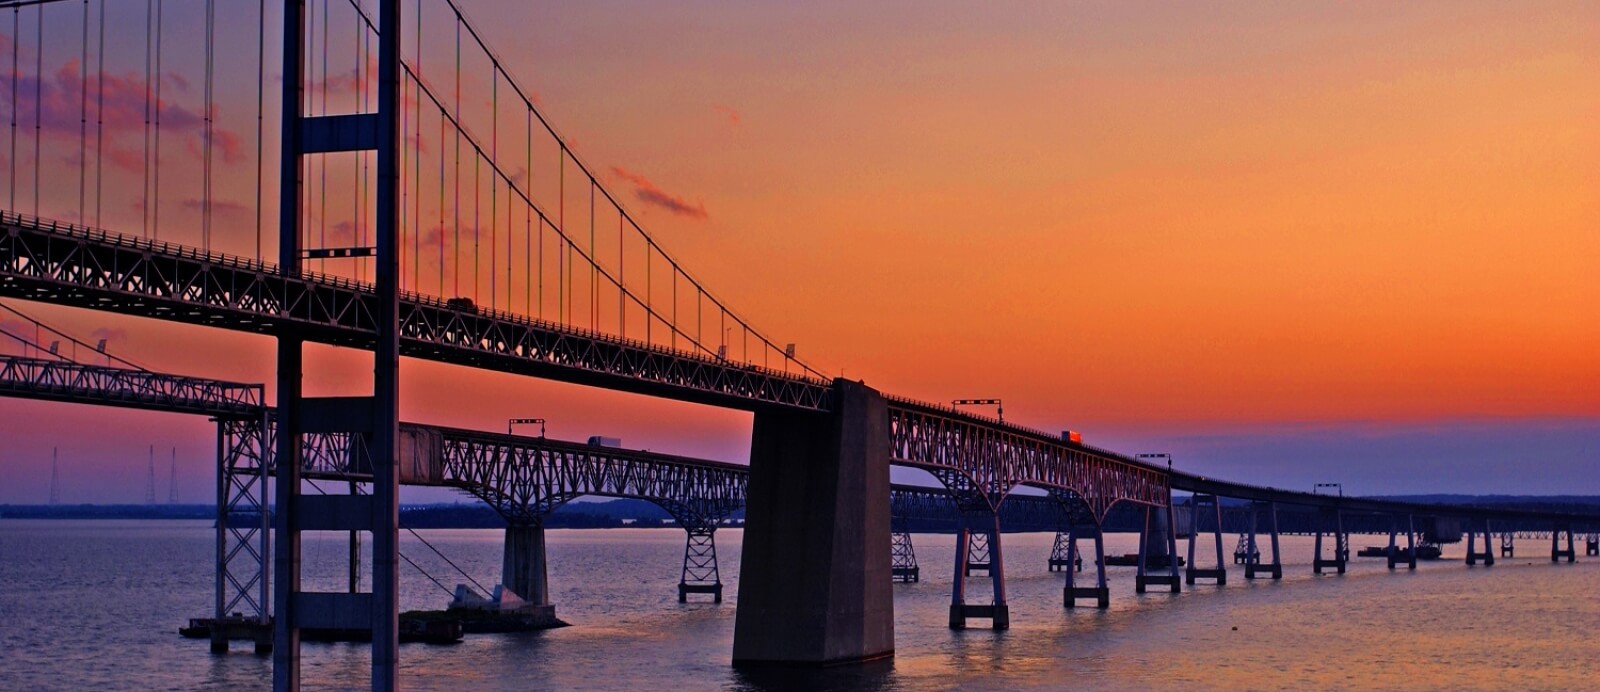 chesapeake bay bridge at dawn